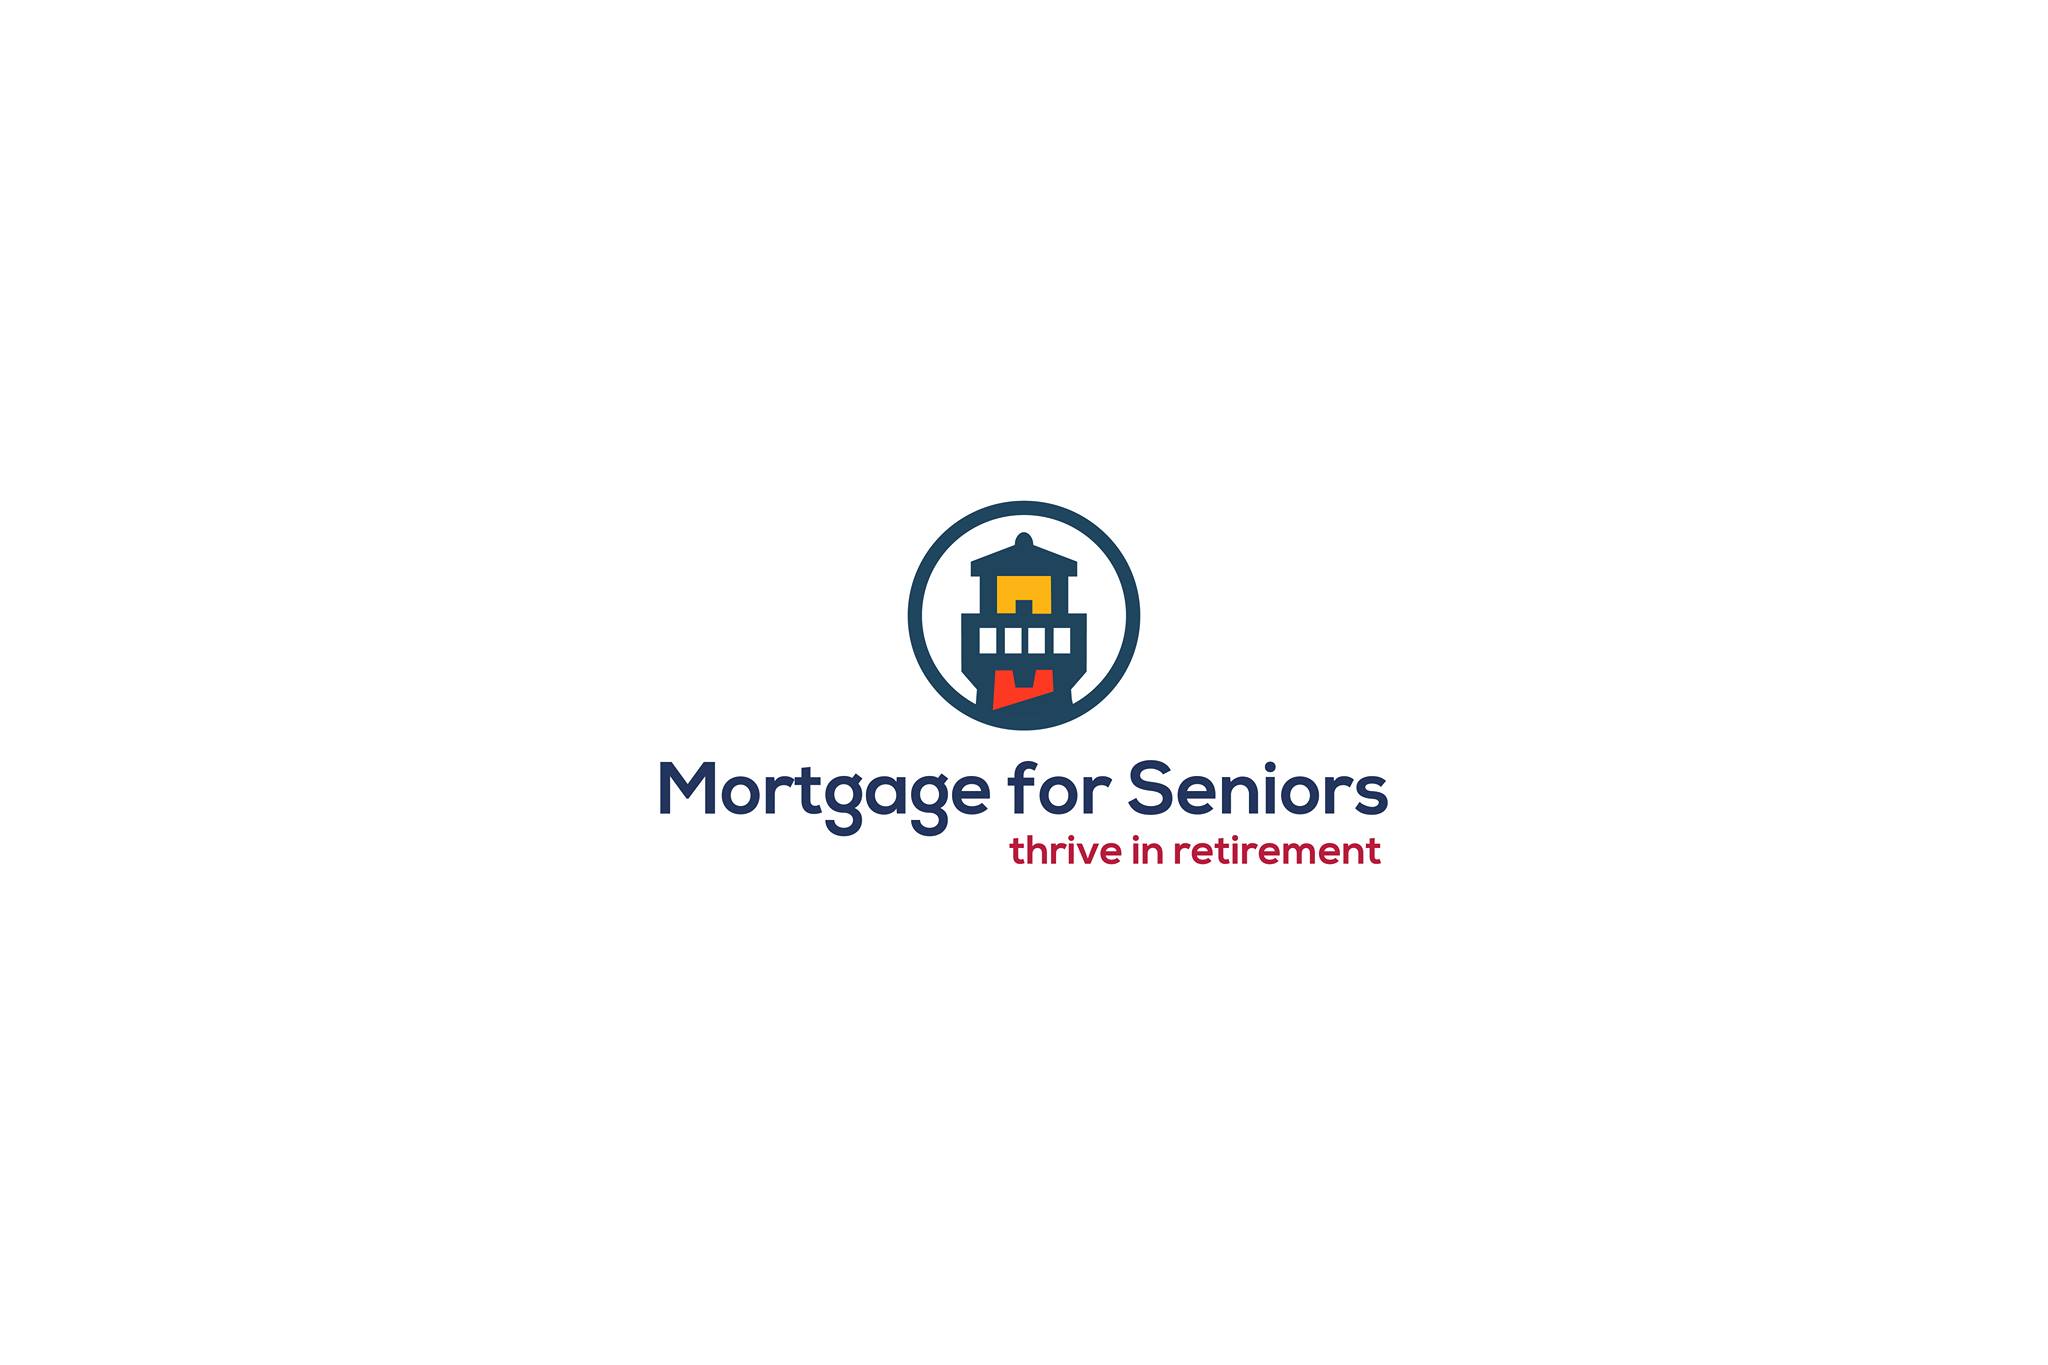 Mortgage for Seniors